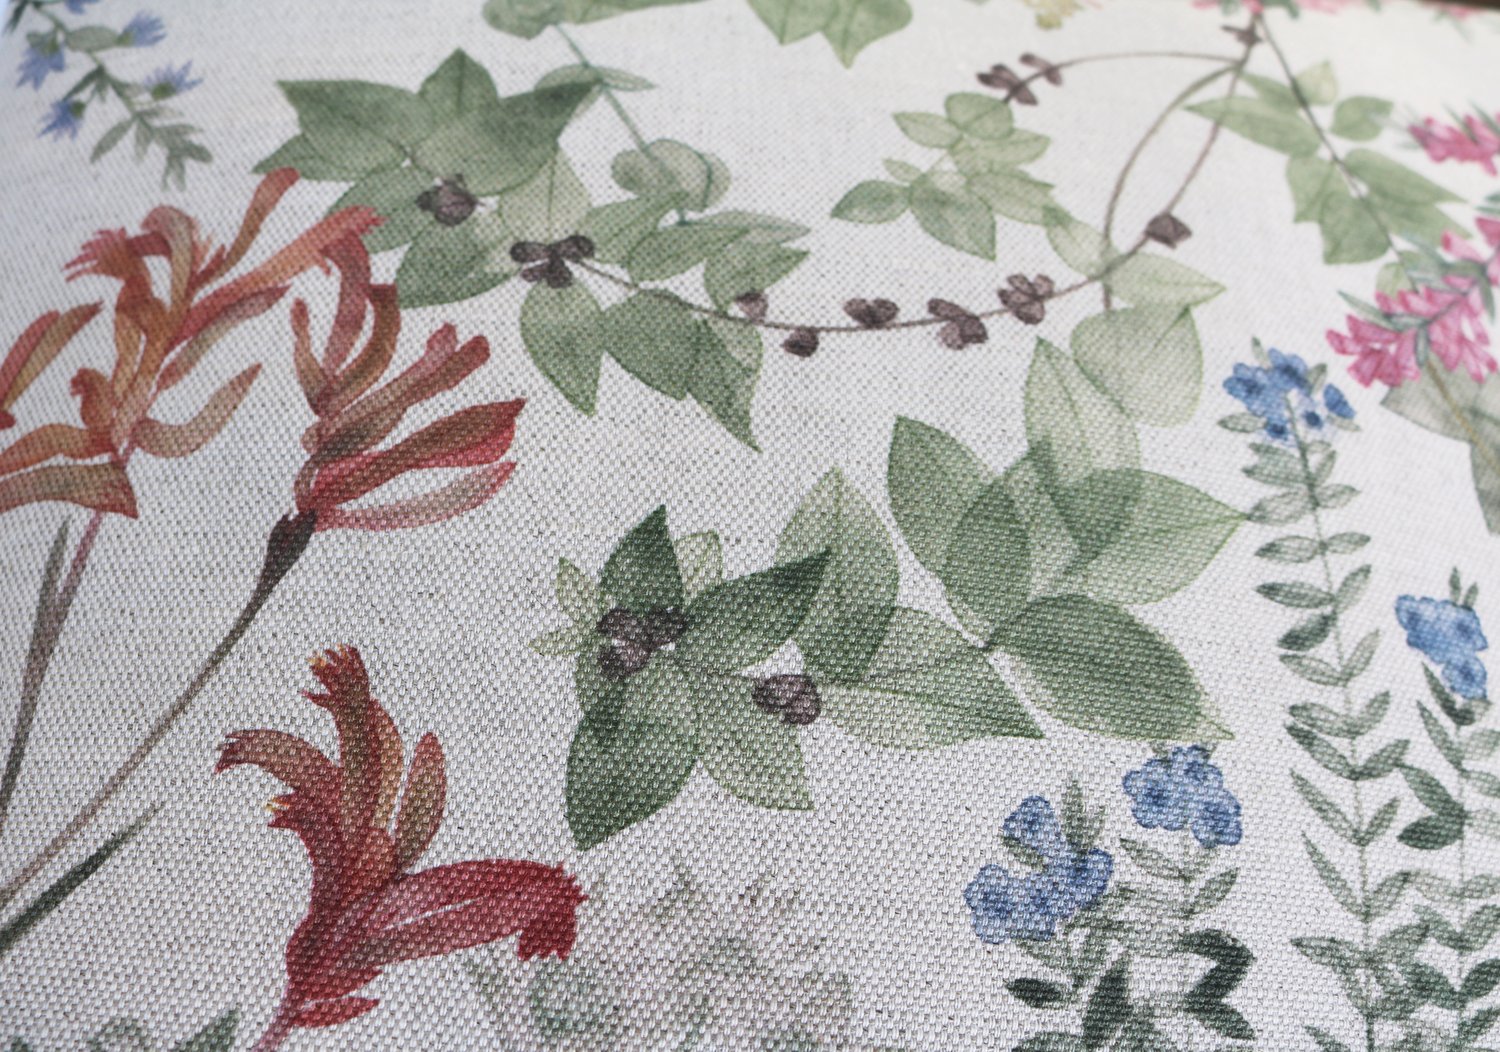 Image of Wildflower Garden Belgian Cotton Linen Cushion